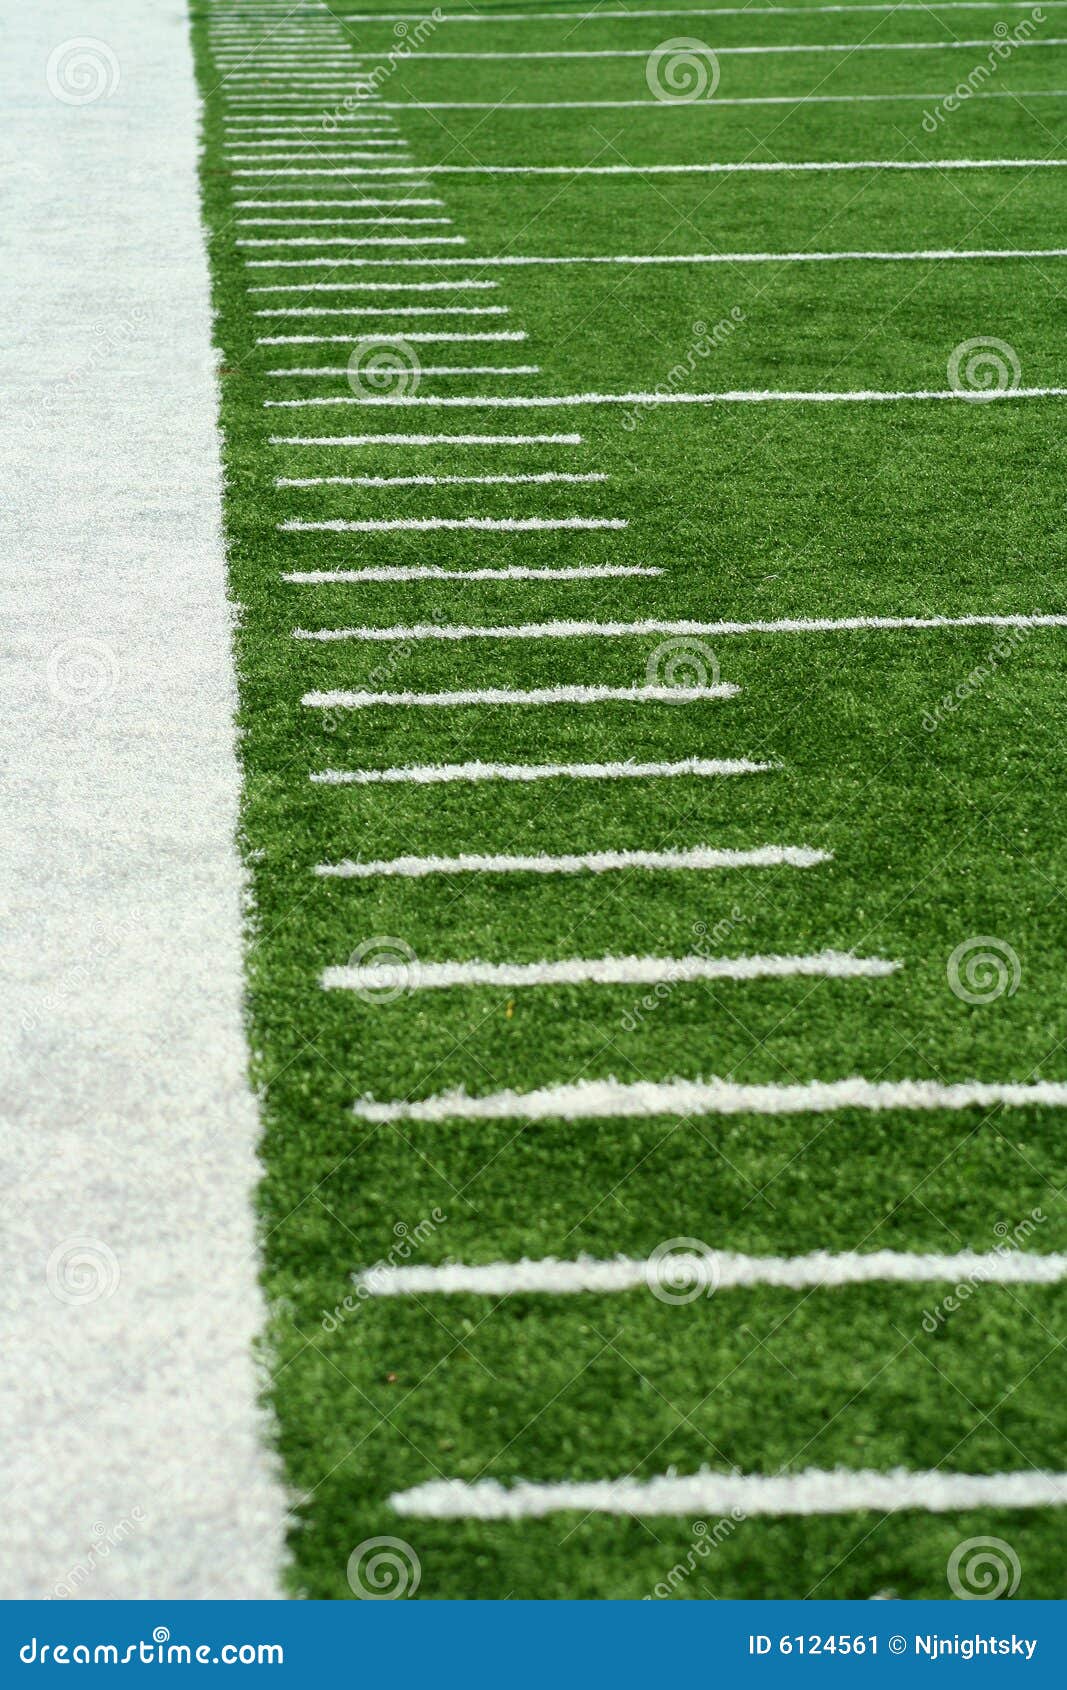 football yard markers